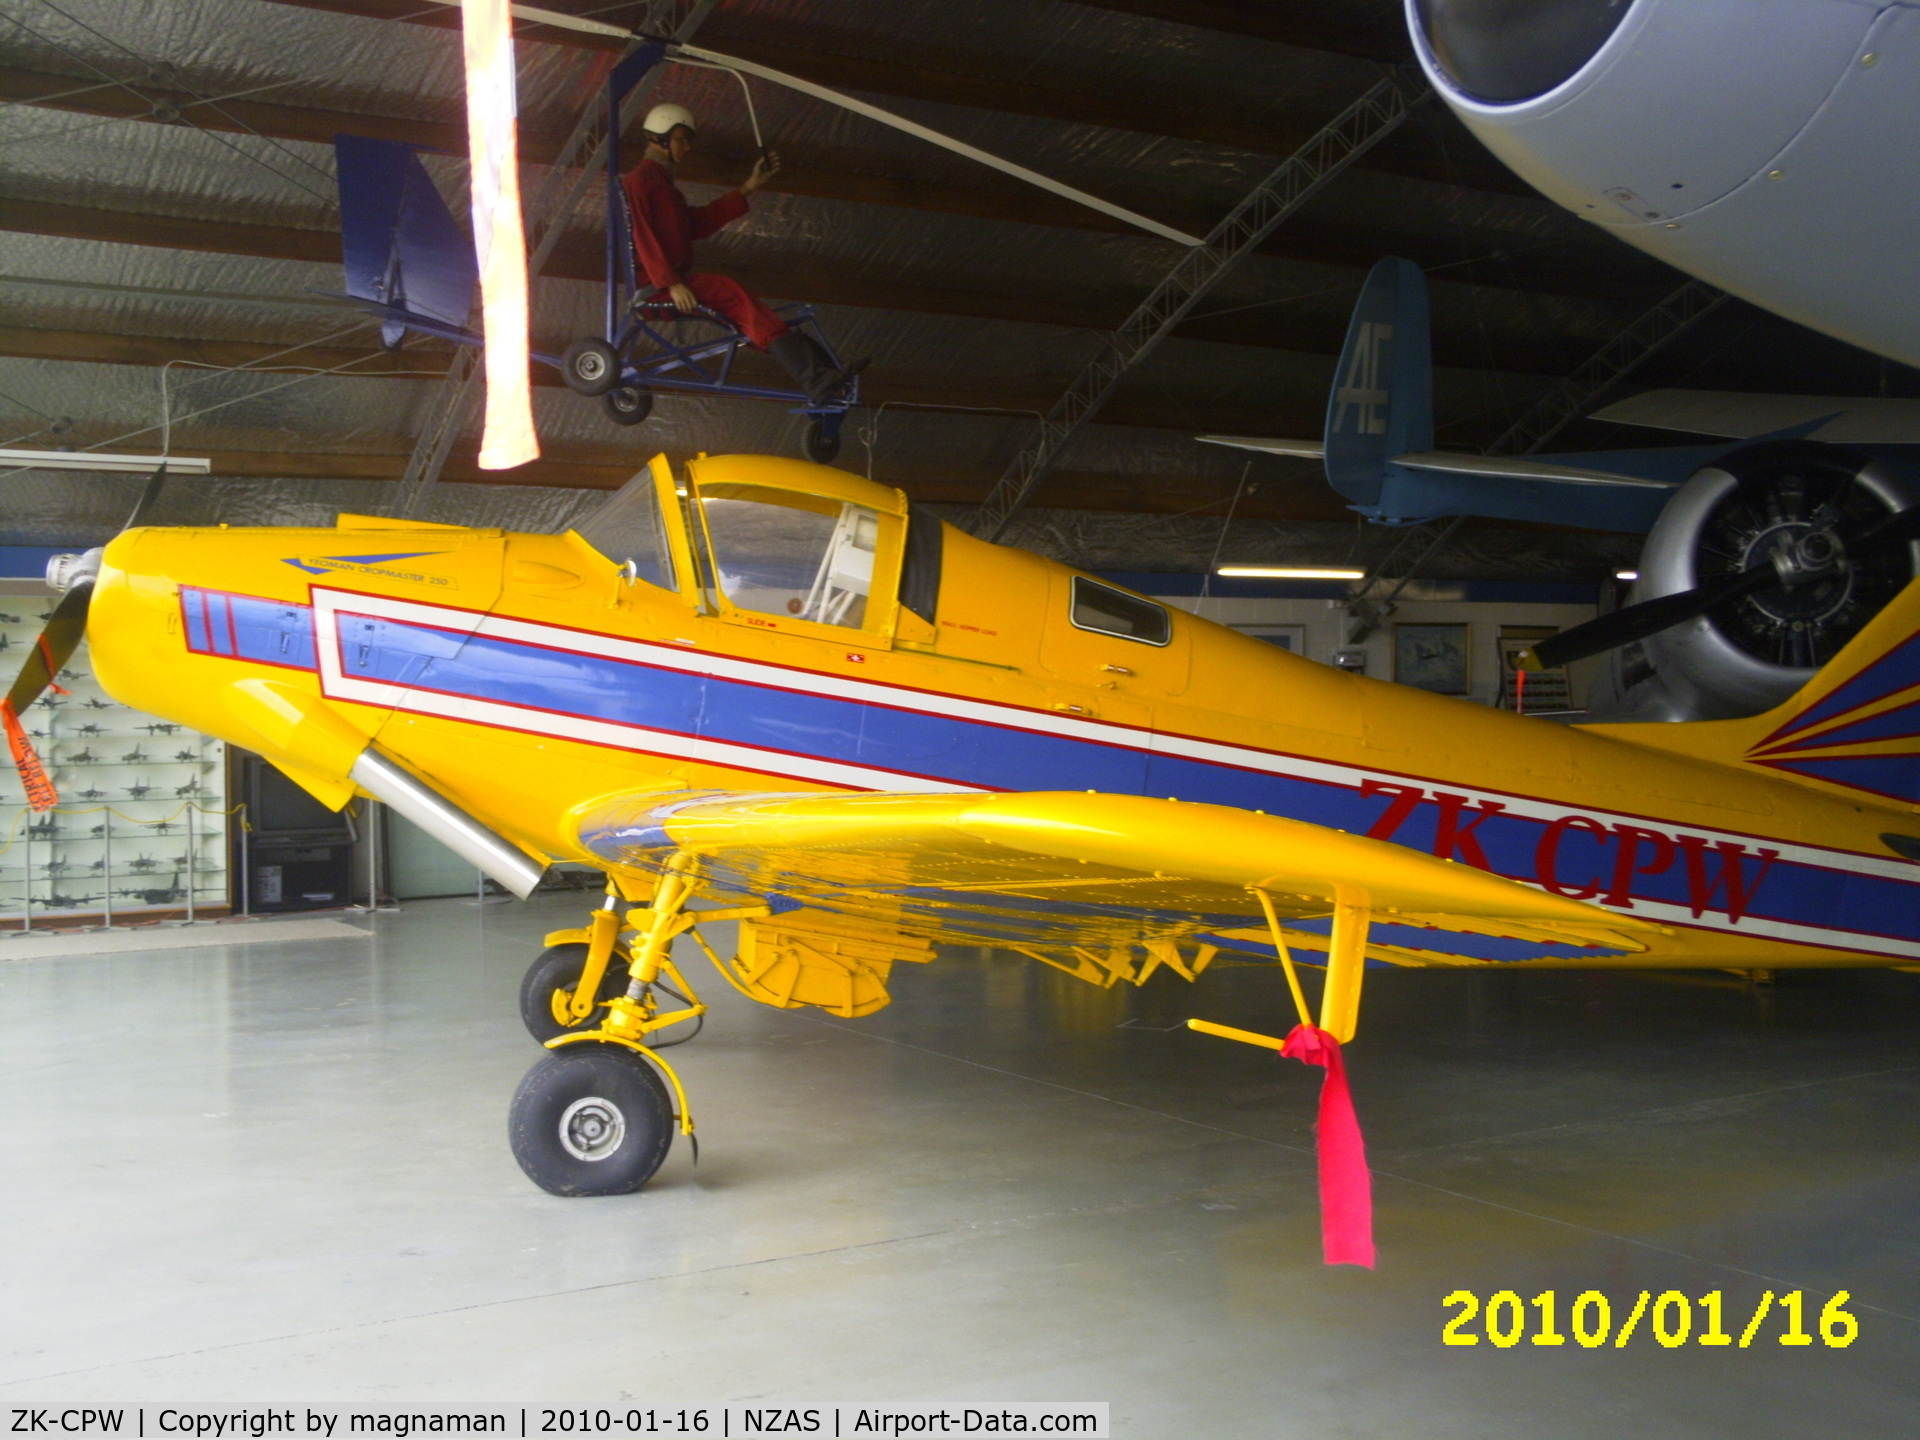 ZK-CPW, Yeoman YA-1 250R Series 2 C/N 119, Squeezed into hangar